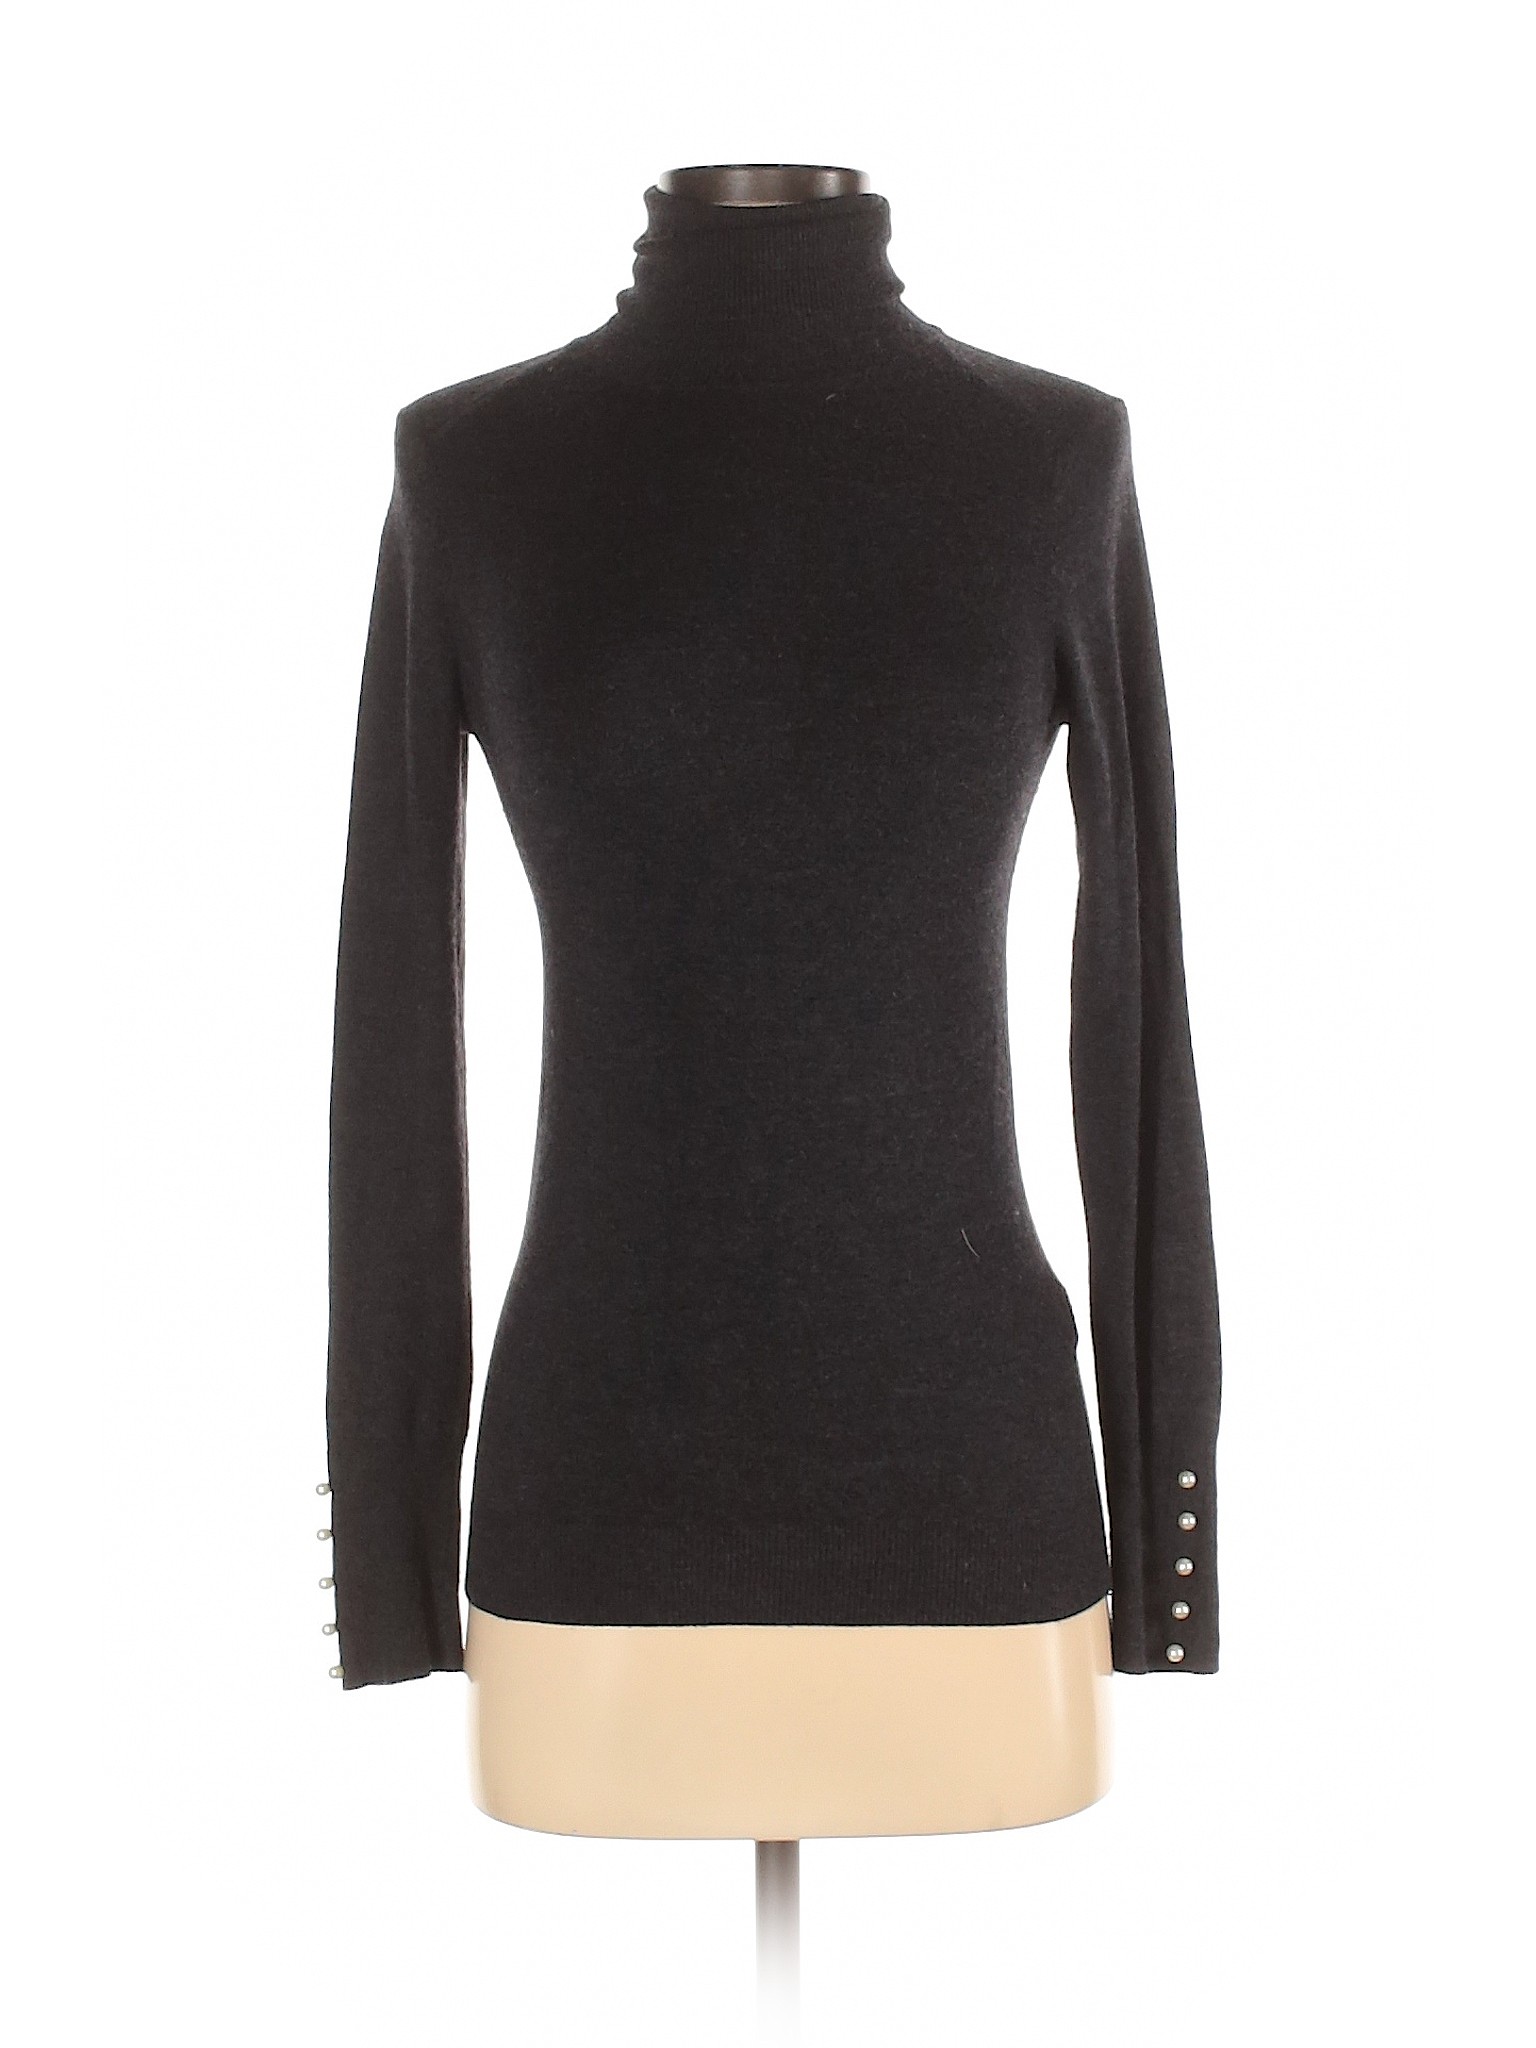 Zara Women Black Turtleneck Sweater S Ebay